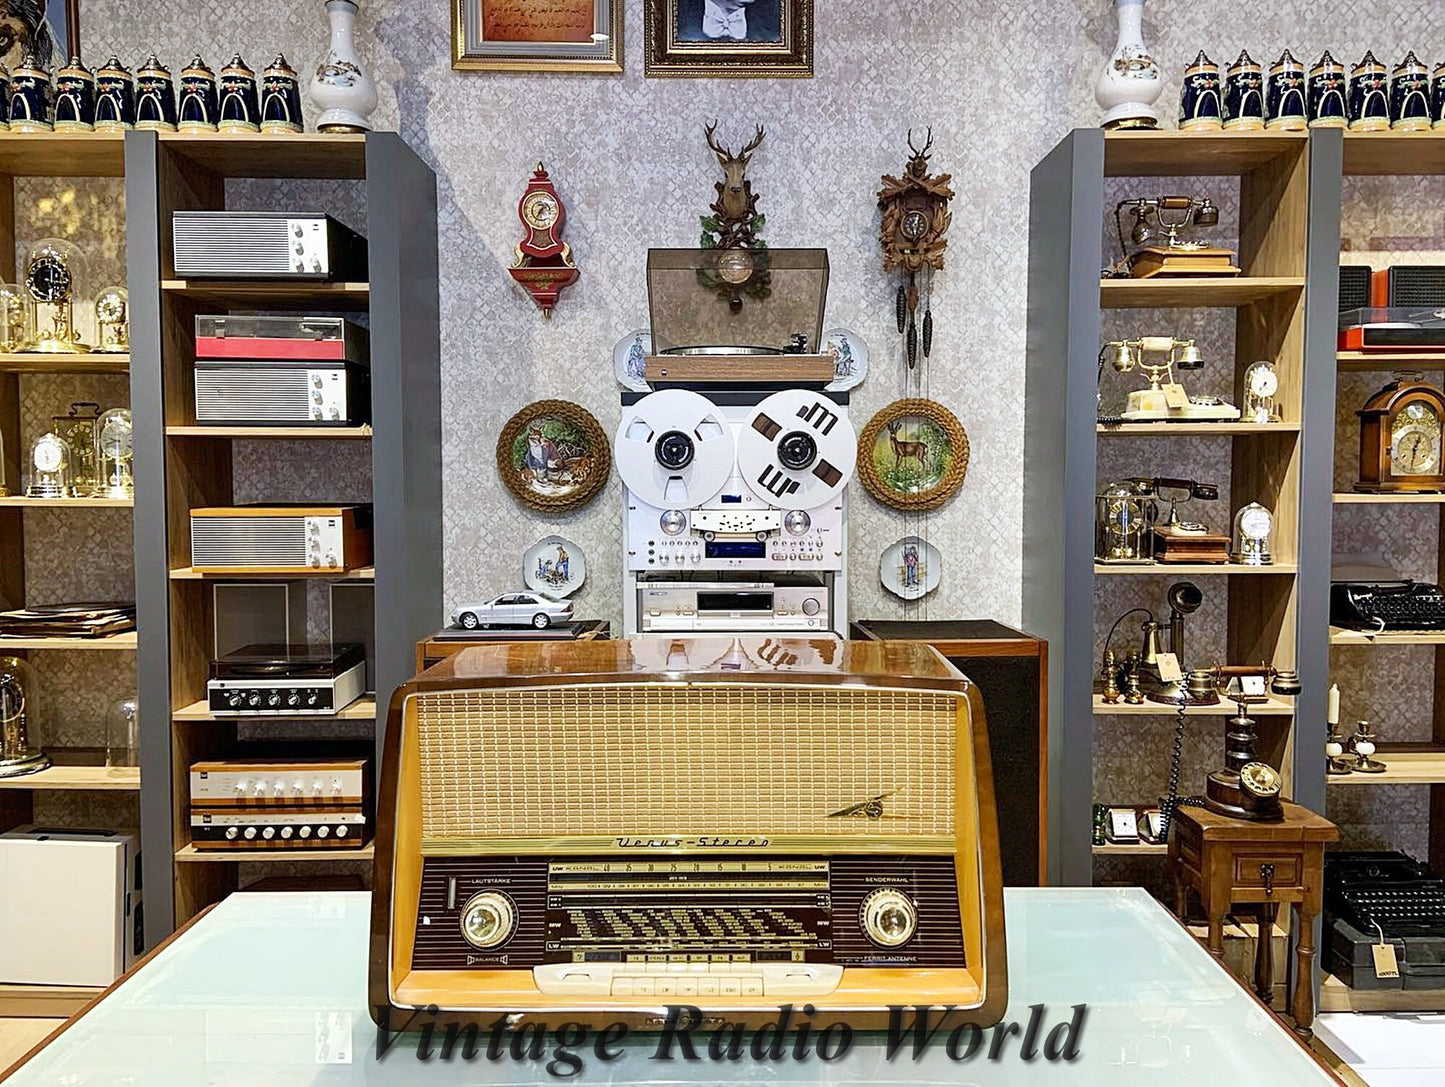 Loewe Opta Venüs Vintage Radio: Timeless Elegance with Antique Design and Lamp Feature